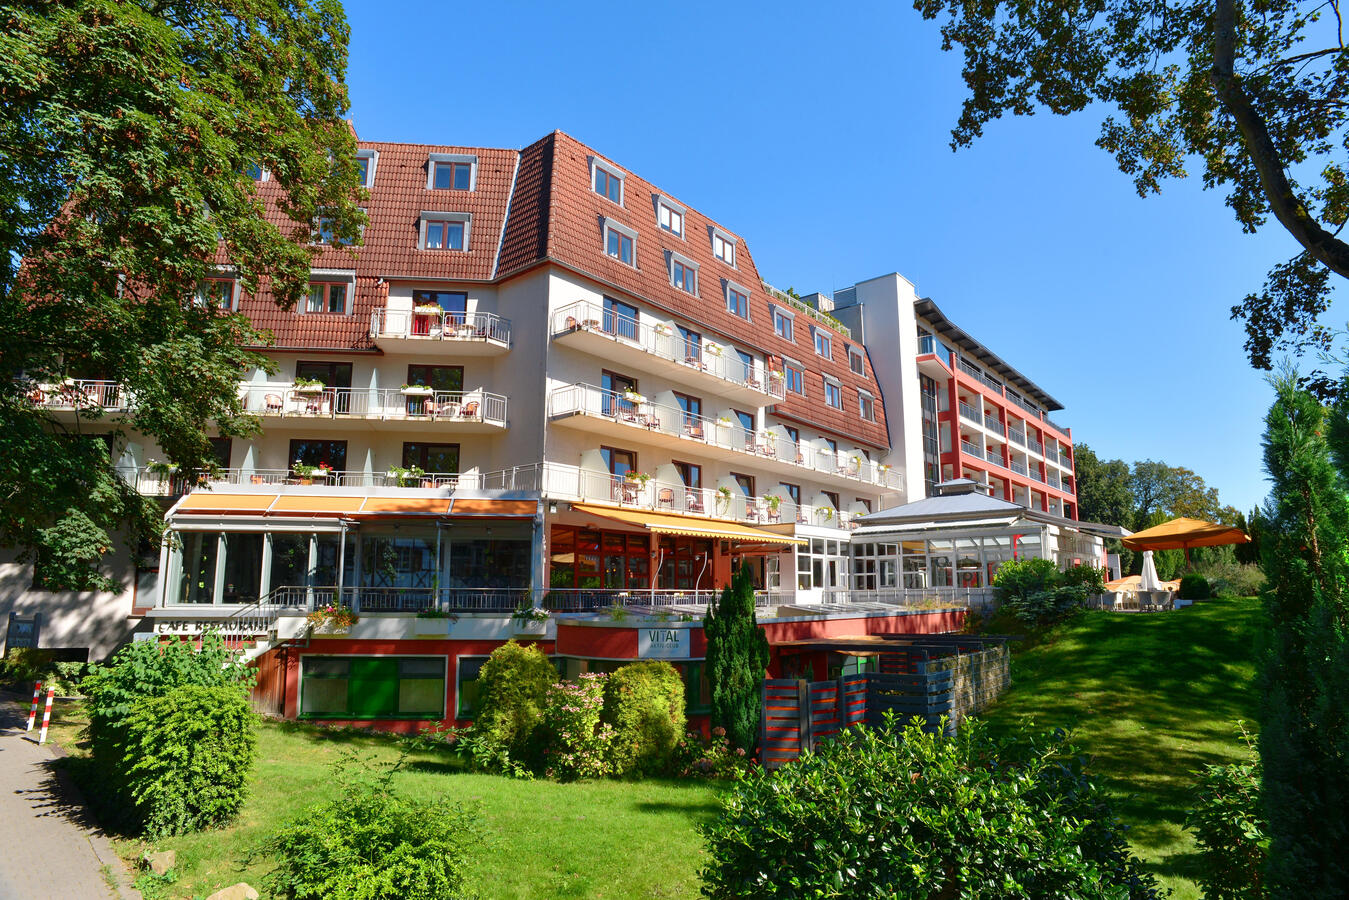 Ringhotel Zweibrücker Hof in Herdecke, 4-Sterne Hotel im Ruhrgebiet